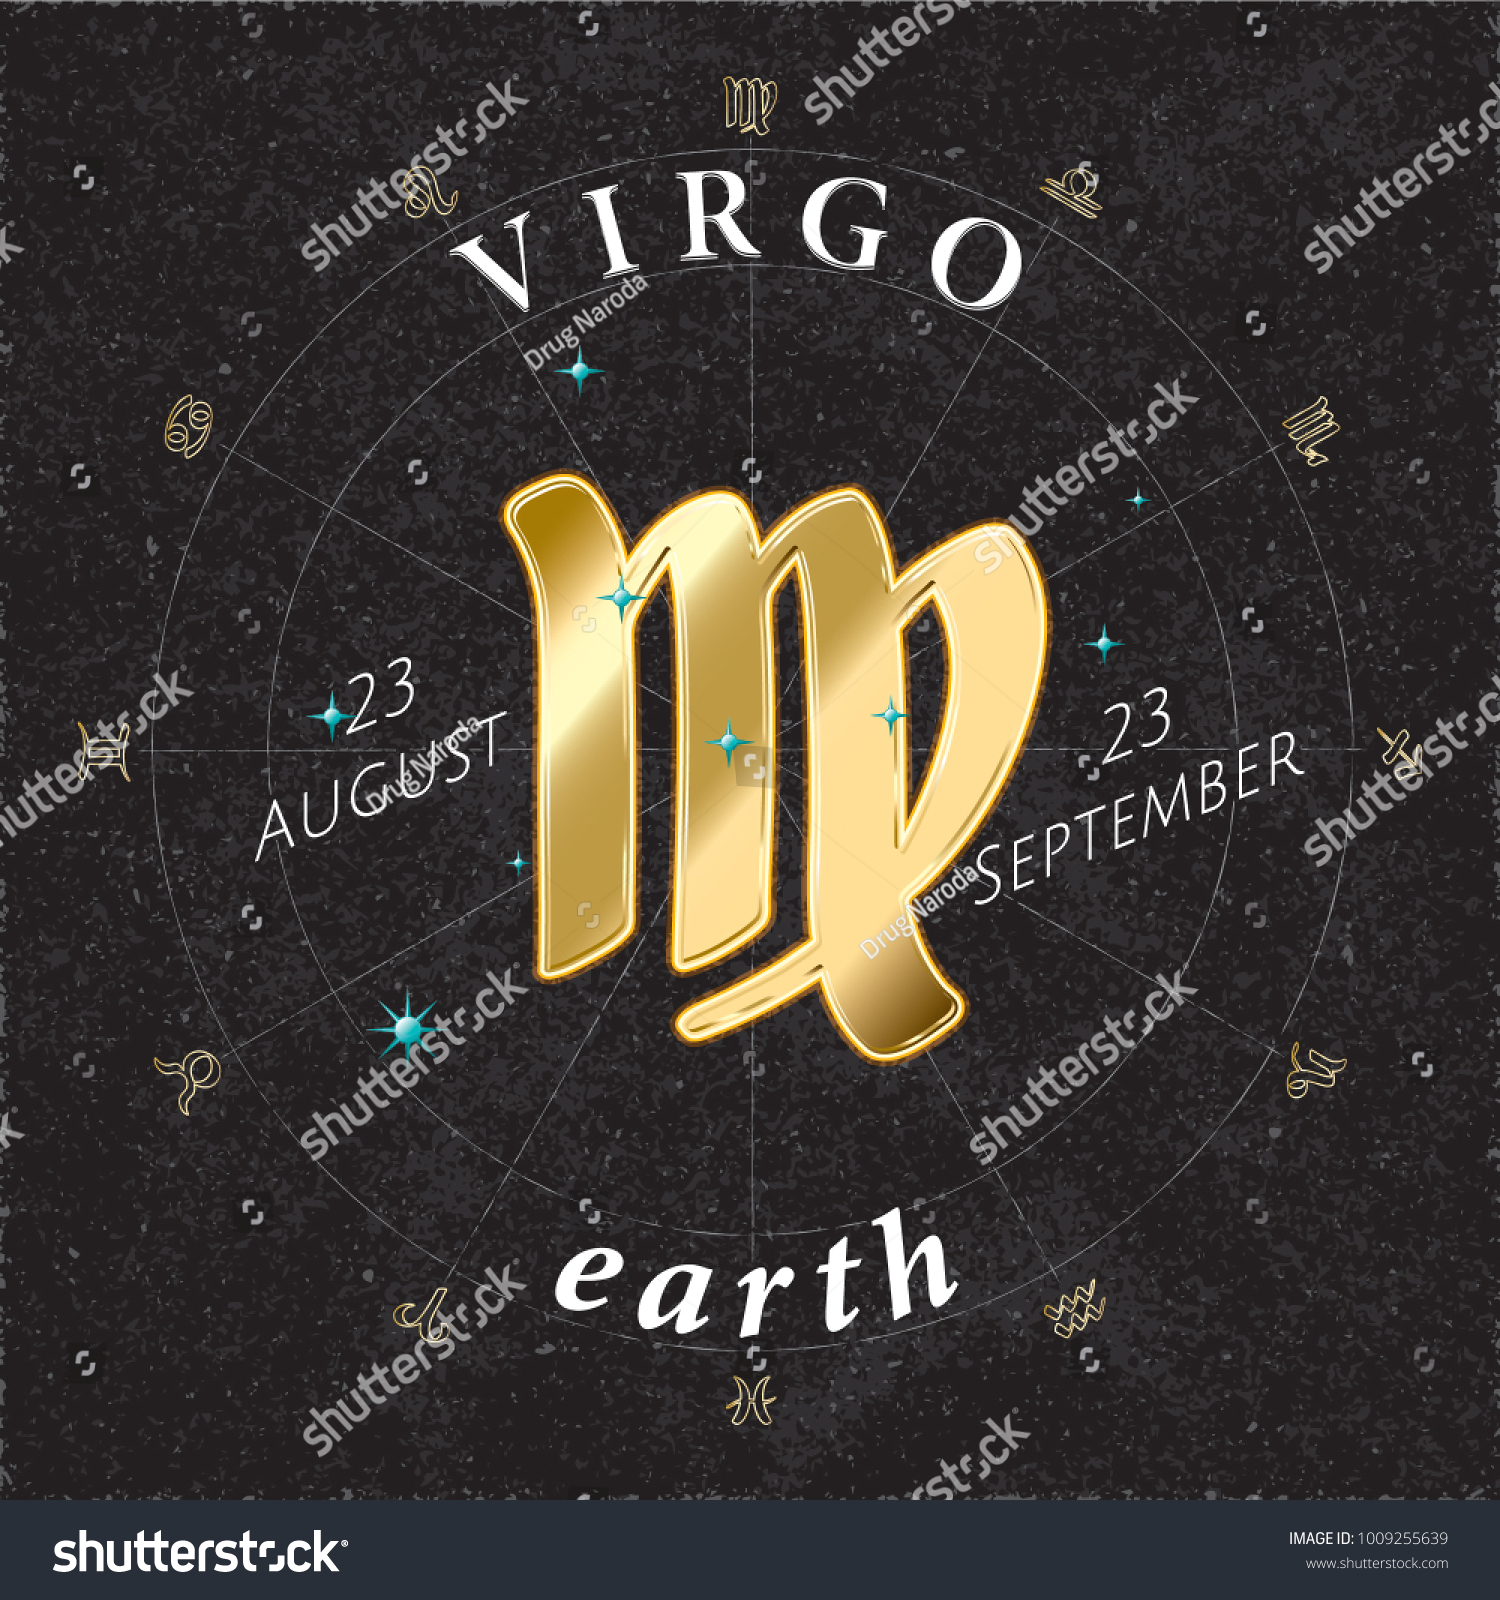 Virgo dates